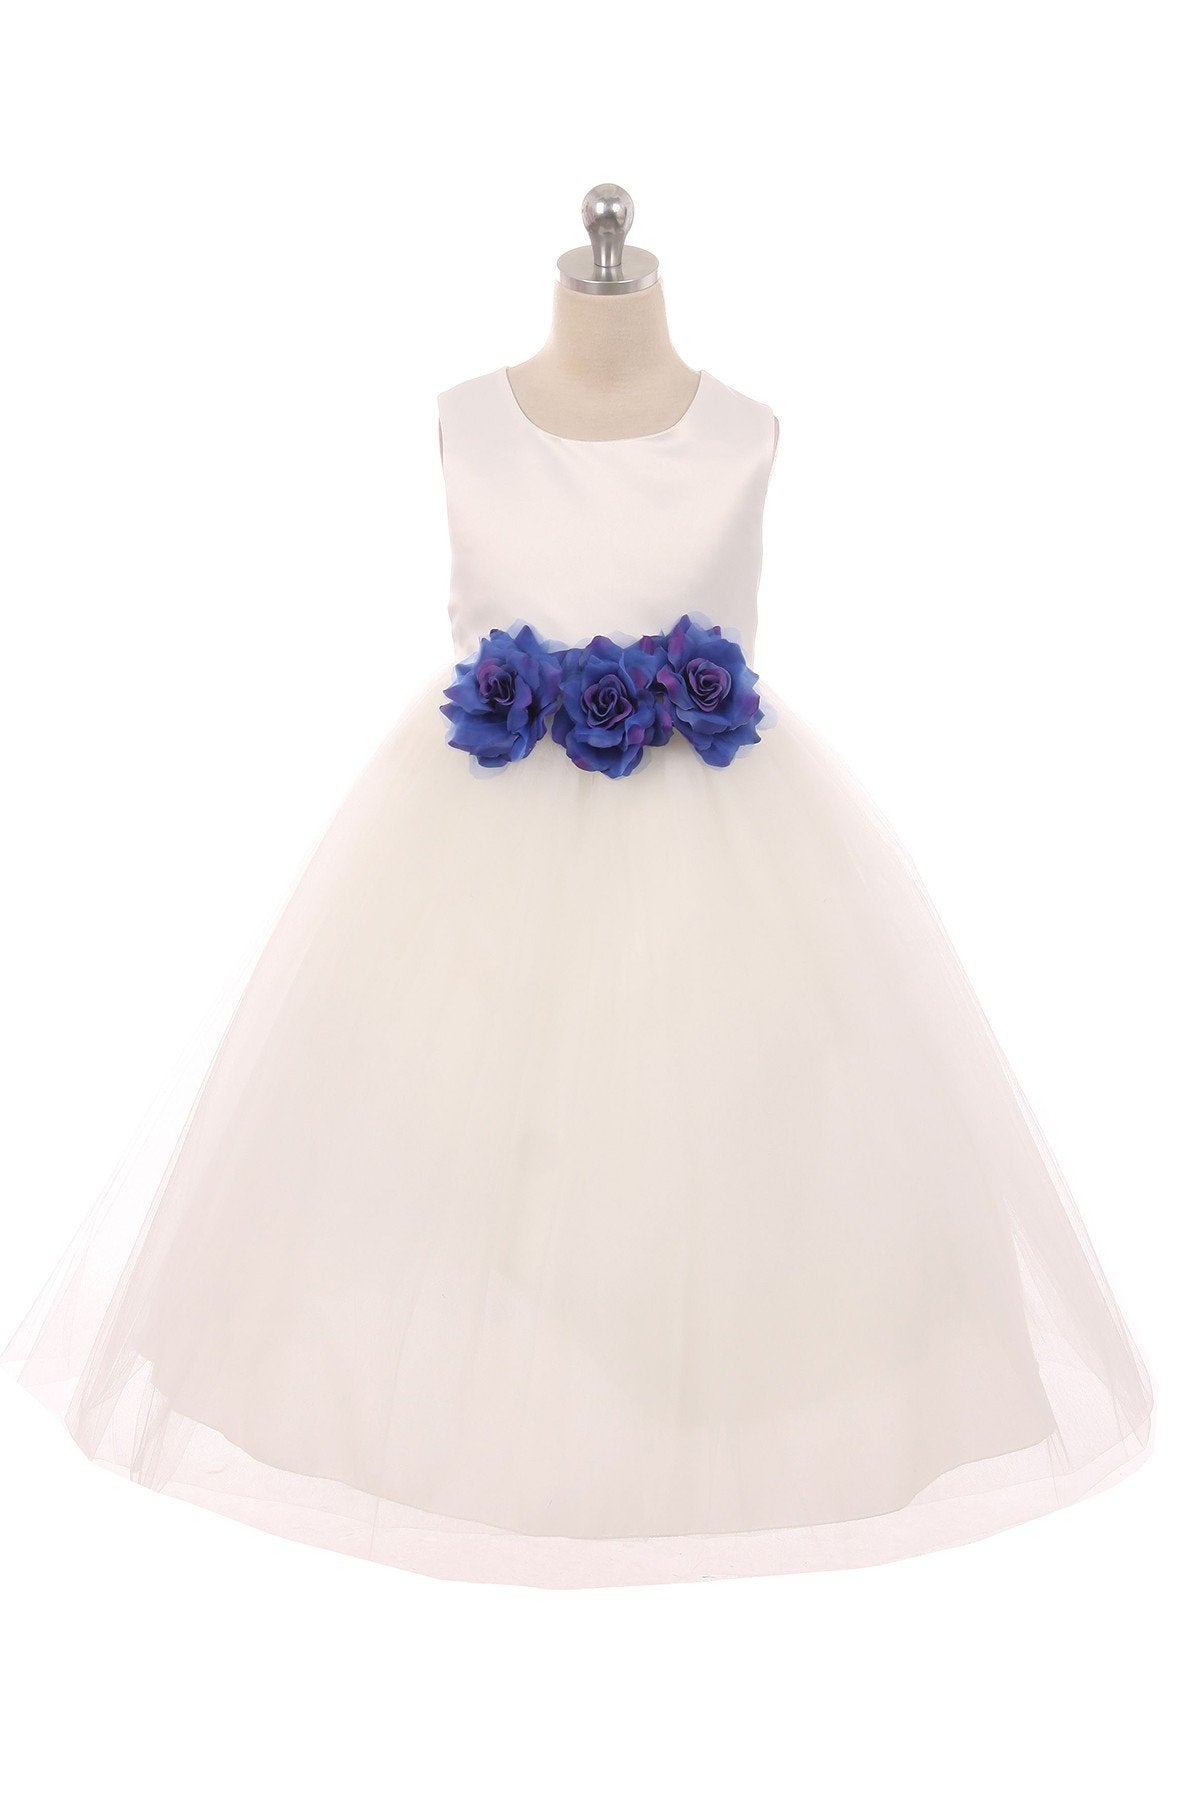 Dress - Satin 3 Flower Ivory Dress